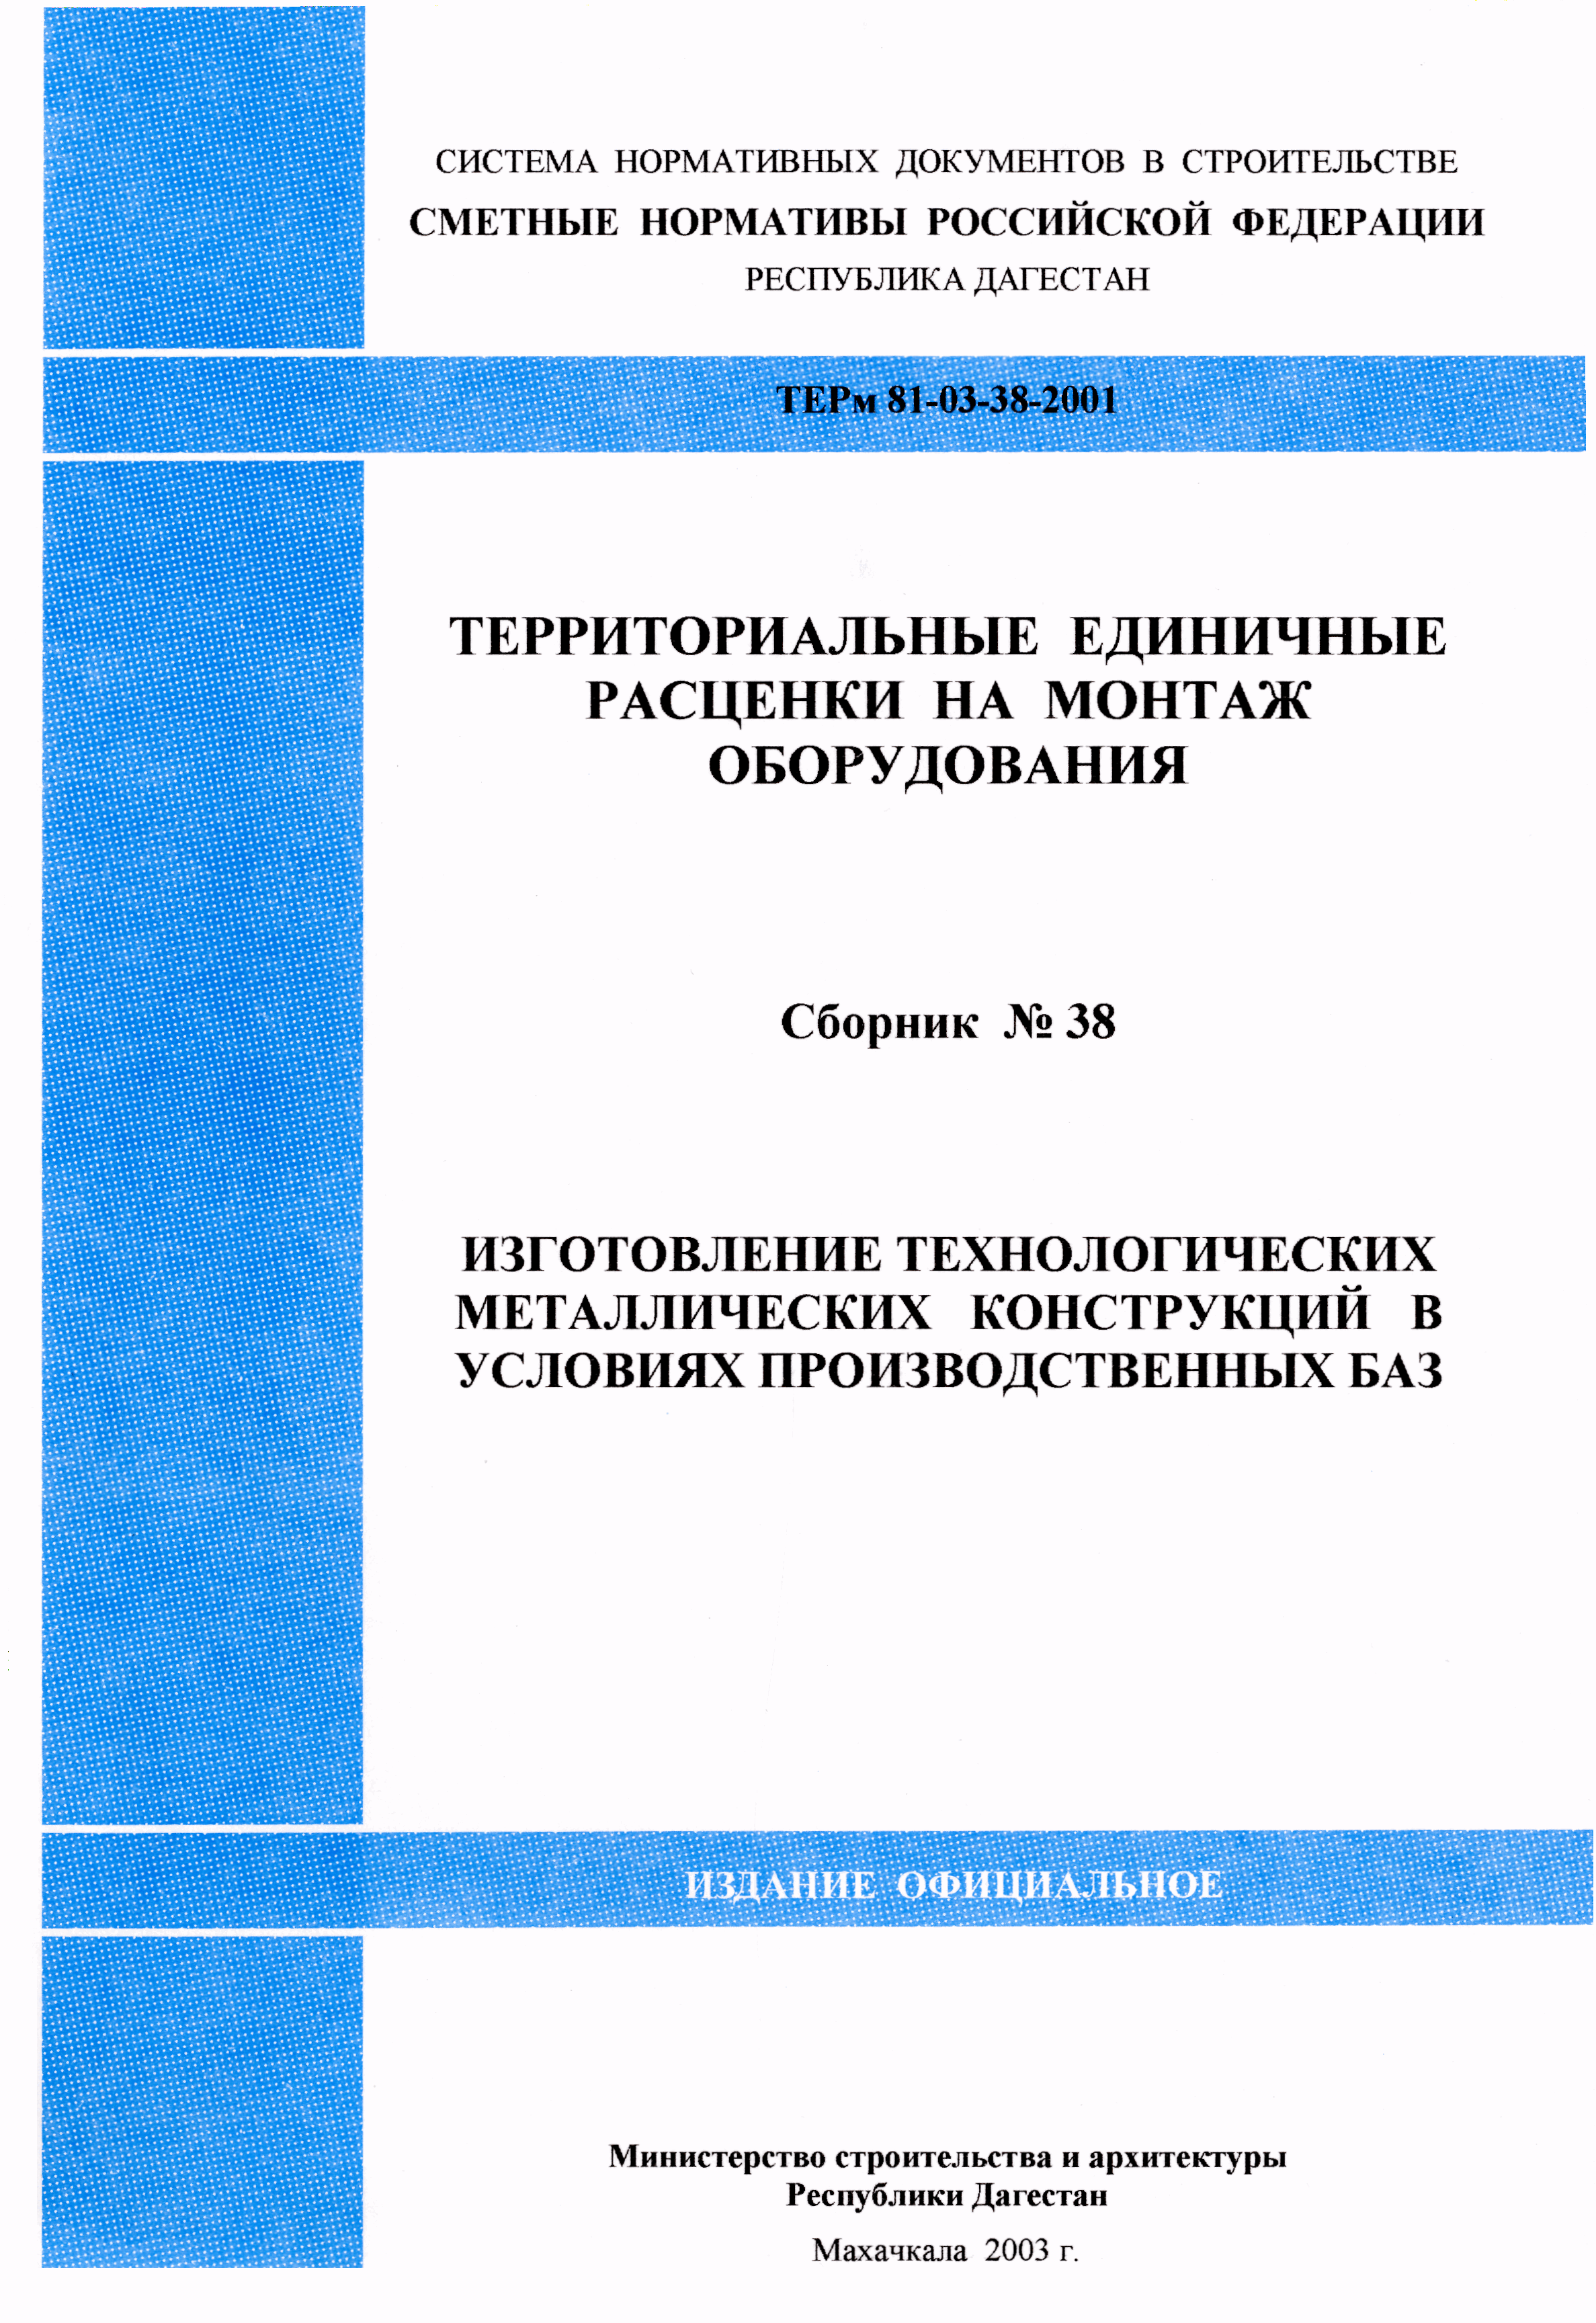 ТЕРм Республика Дагестан 2001-38